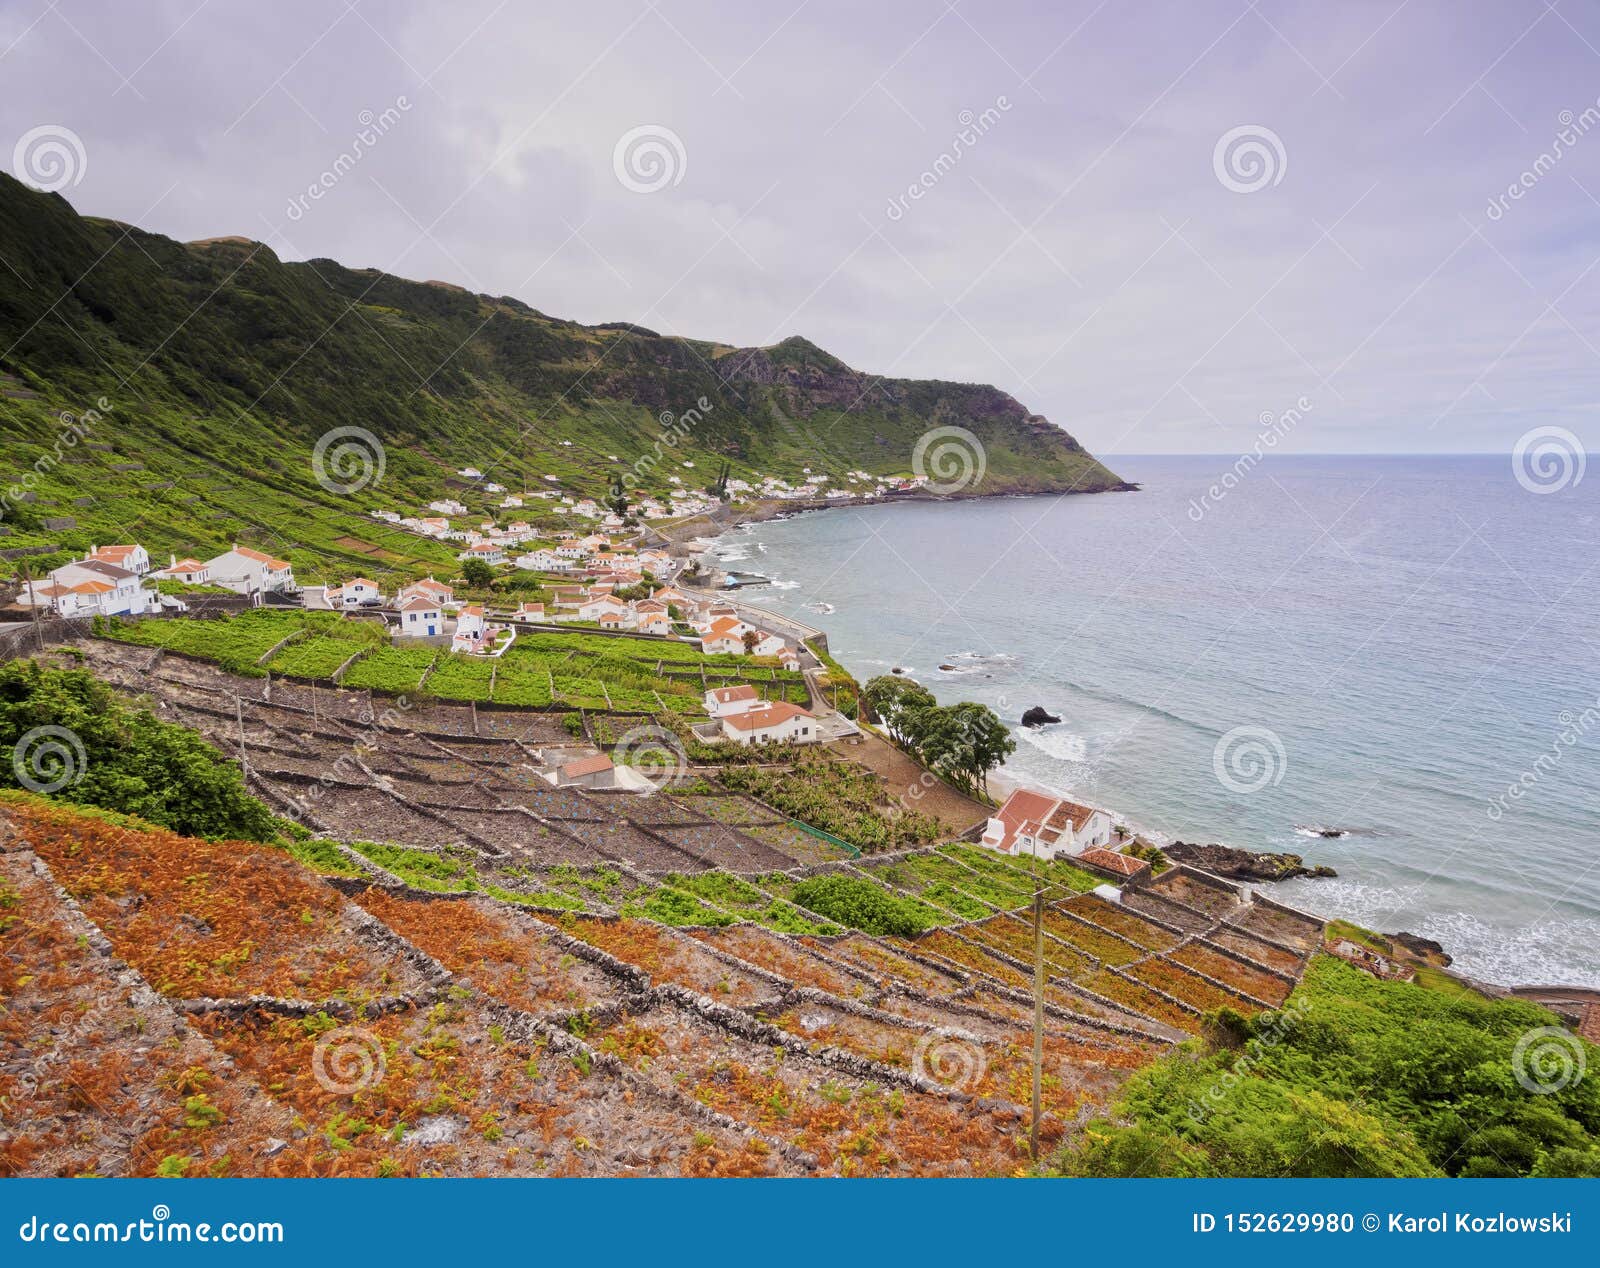 landscape of santa maria island, azores